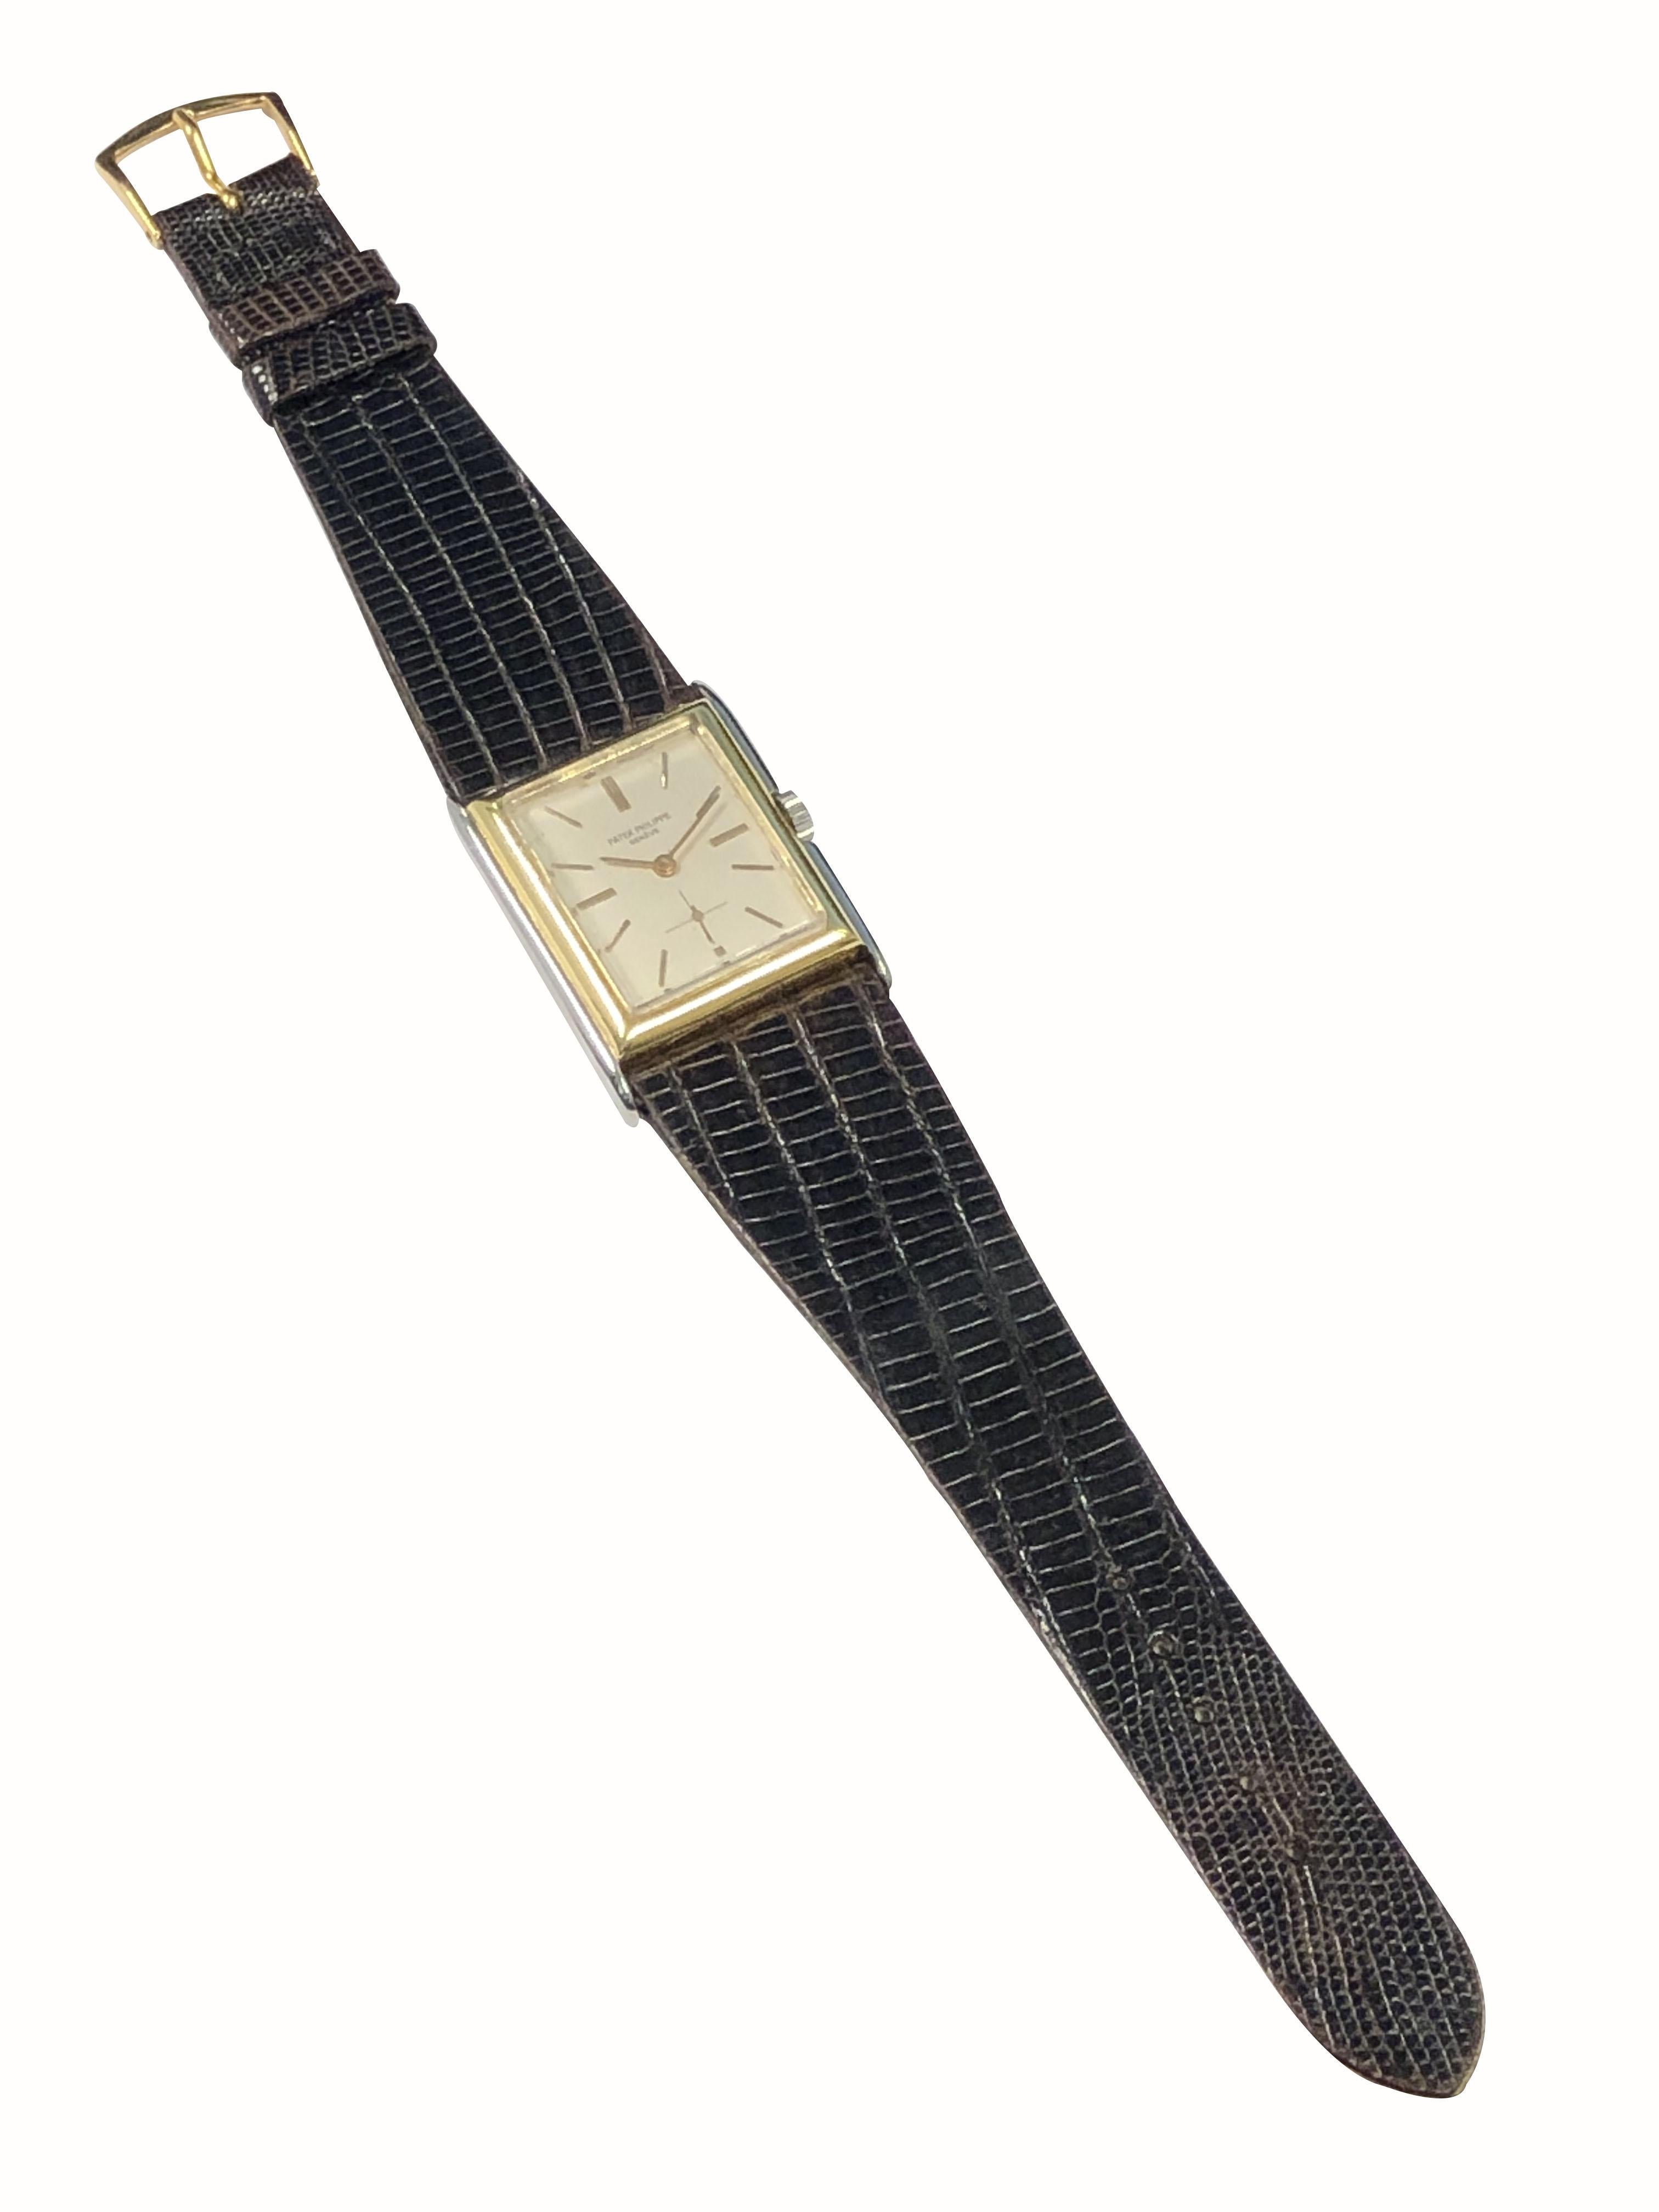 1920 patek philippe watches